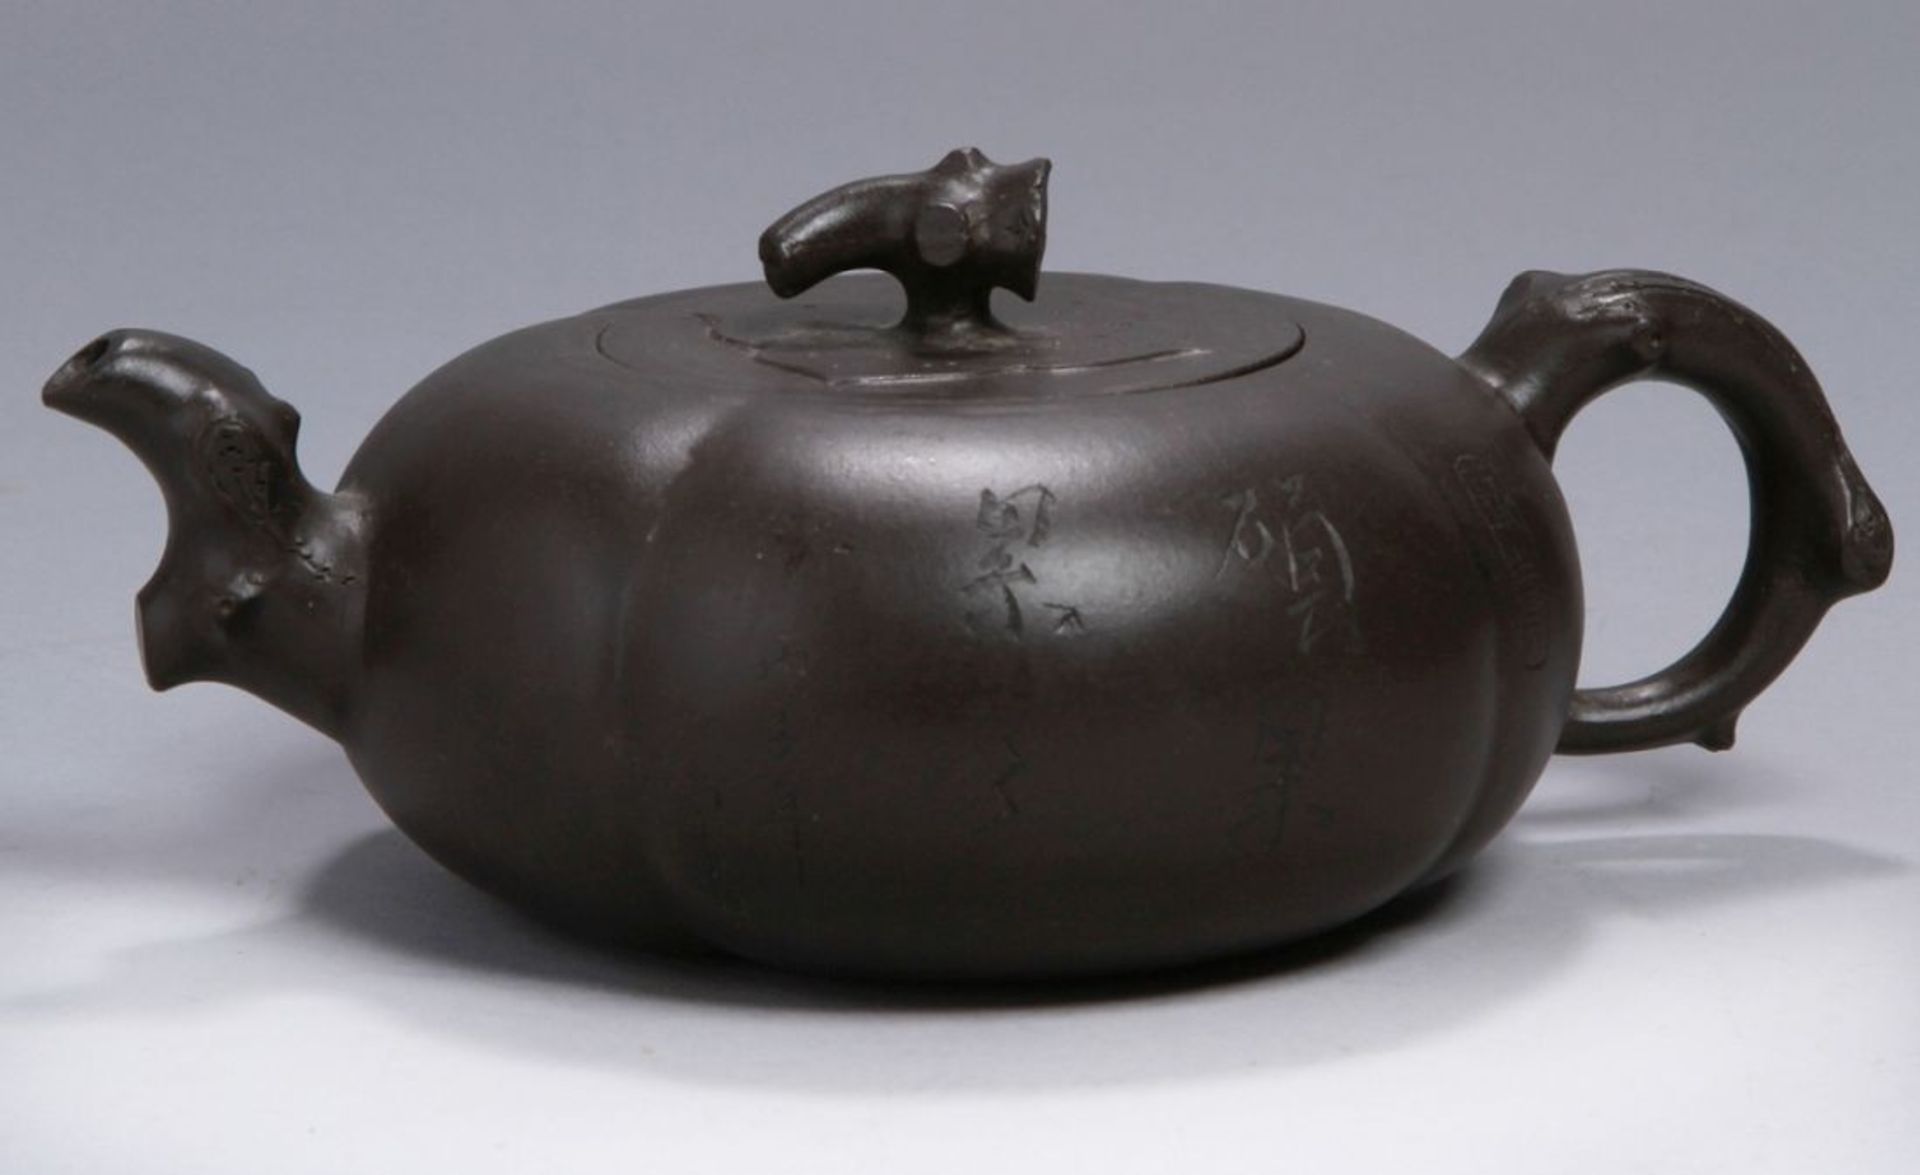 Terracotta-Teekanne, China, 2. Hälfte 20. Jh., 4-fach gerippte Wandung, Flachdeckel mitAstknauf,